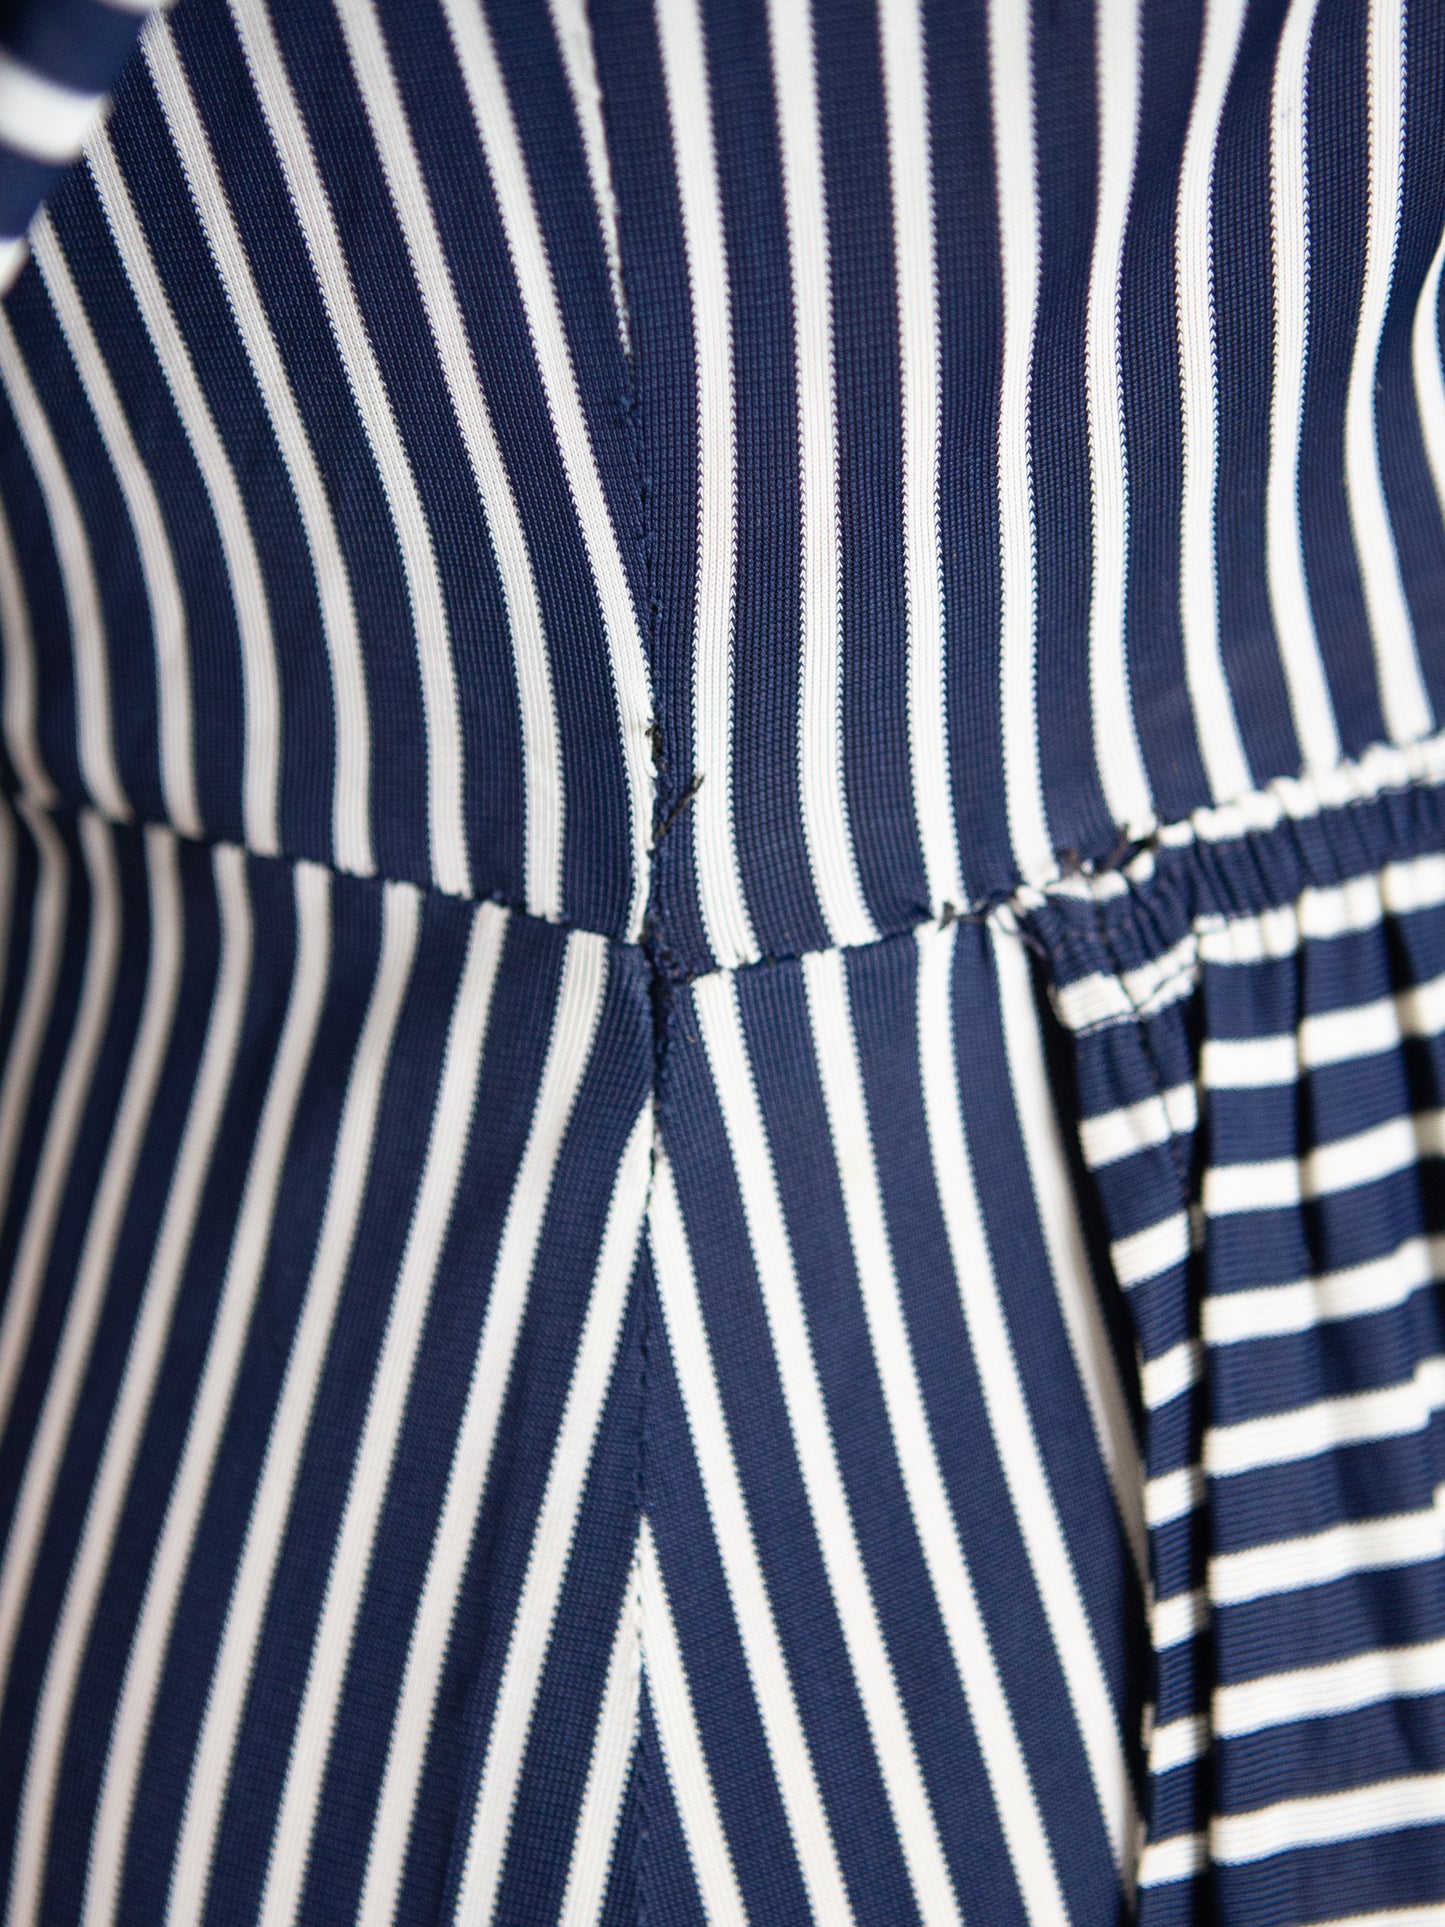 1940s Navy White Stripe Jersey Dress, M/L